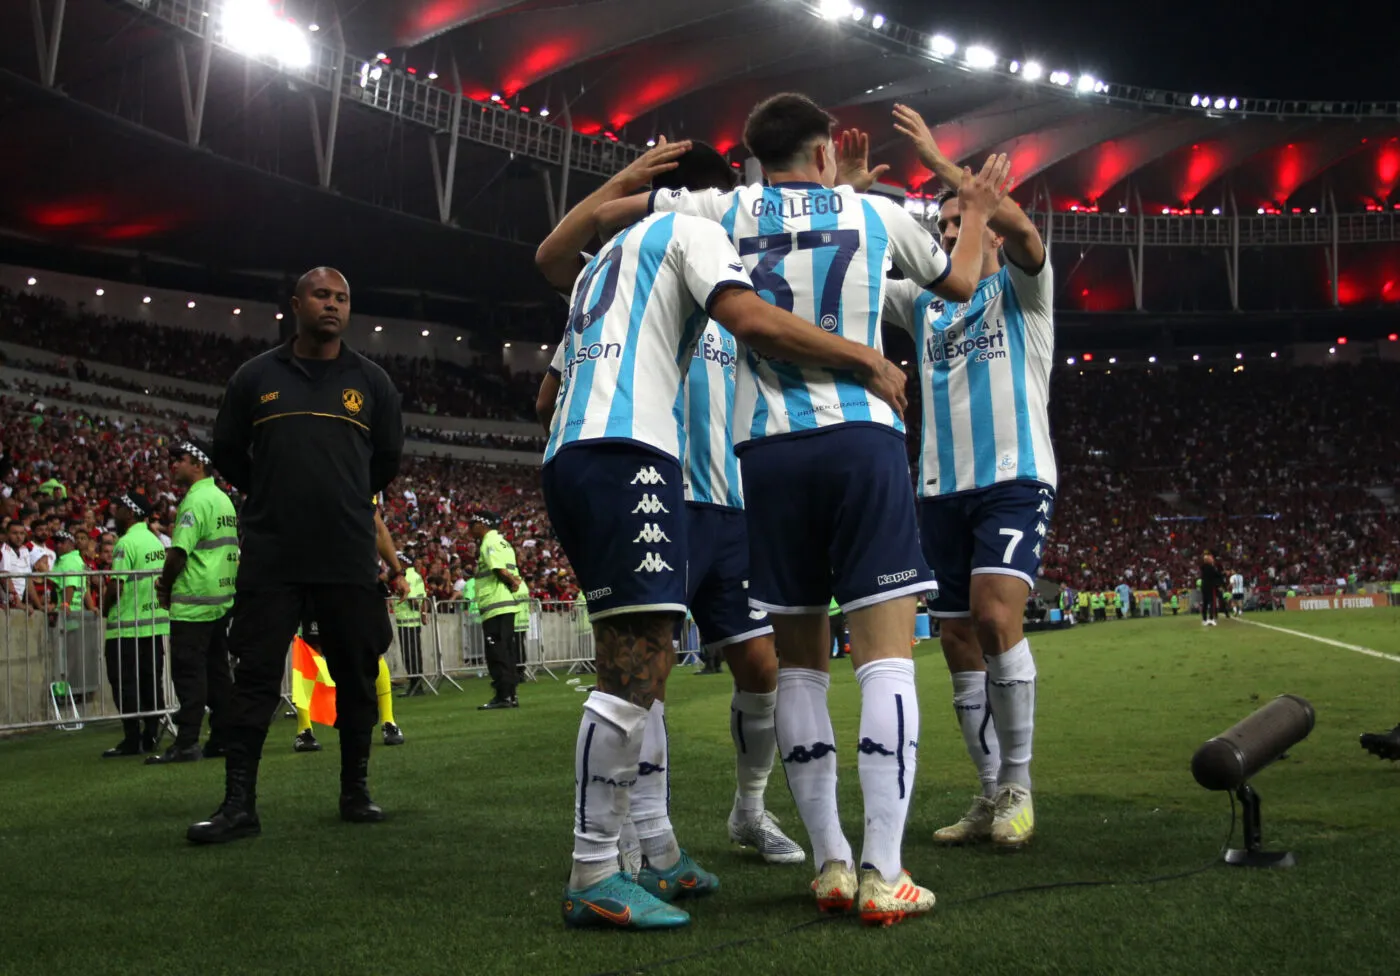 Pronostic Racing Club Nublense : Analyse, cotes et prono du match de Copa Libertadores